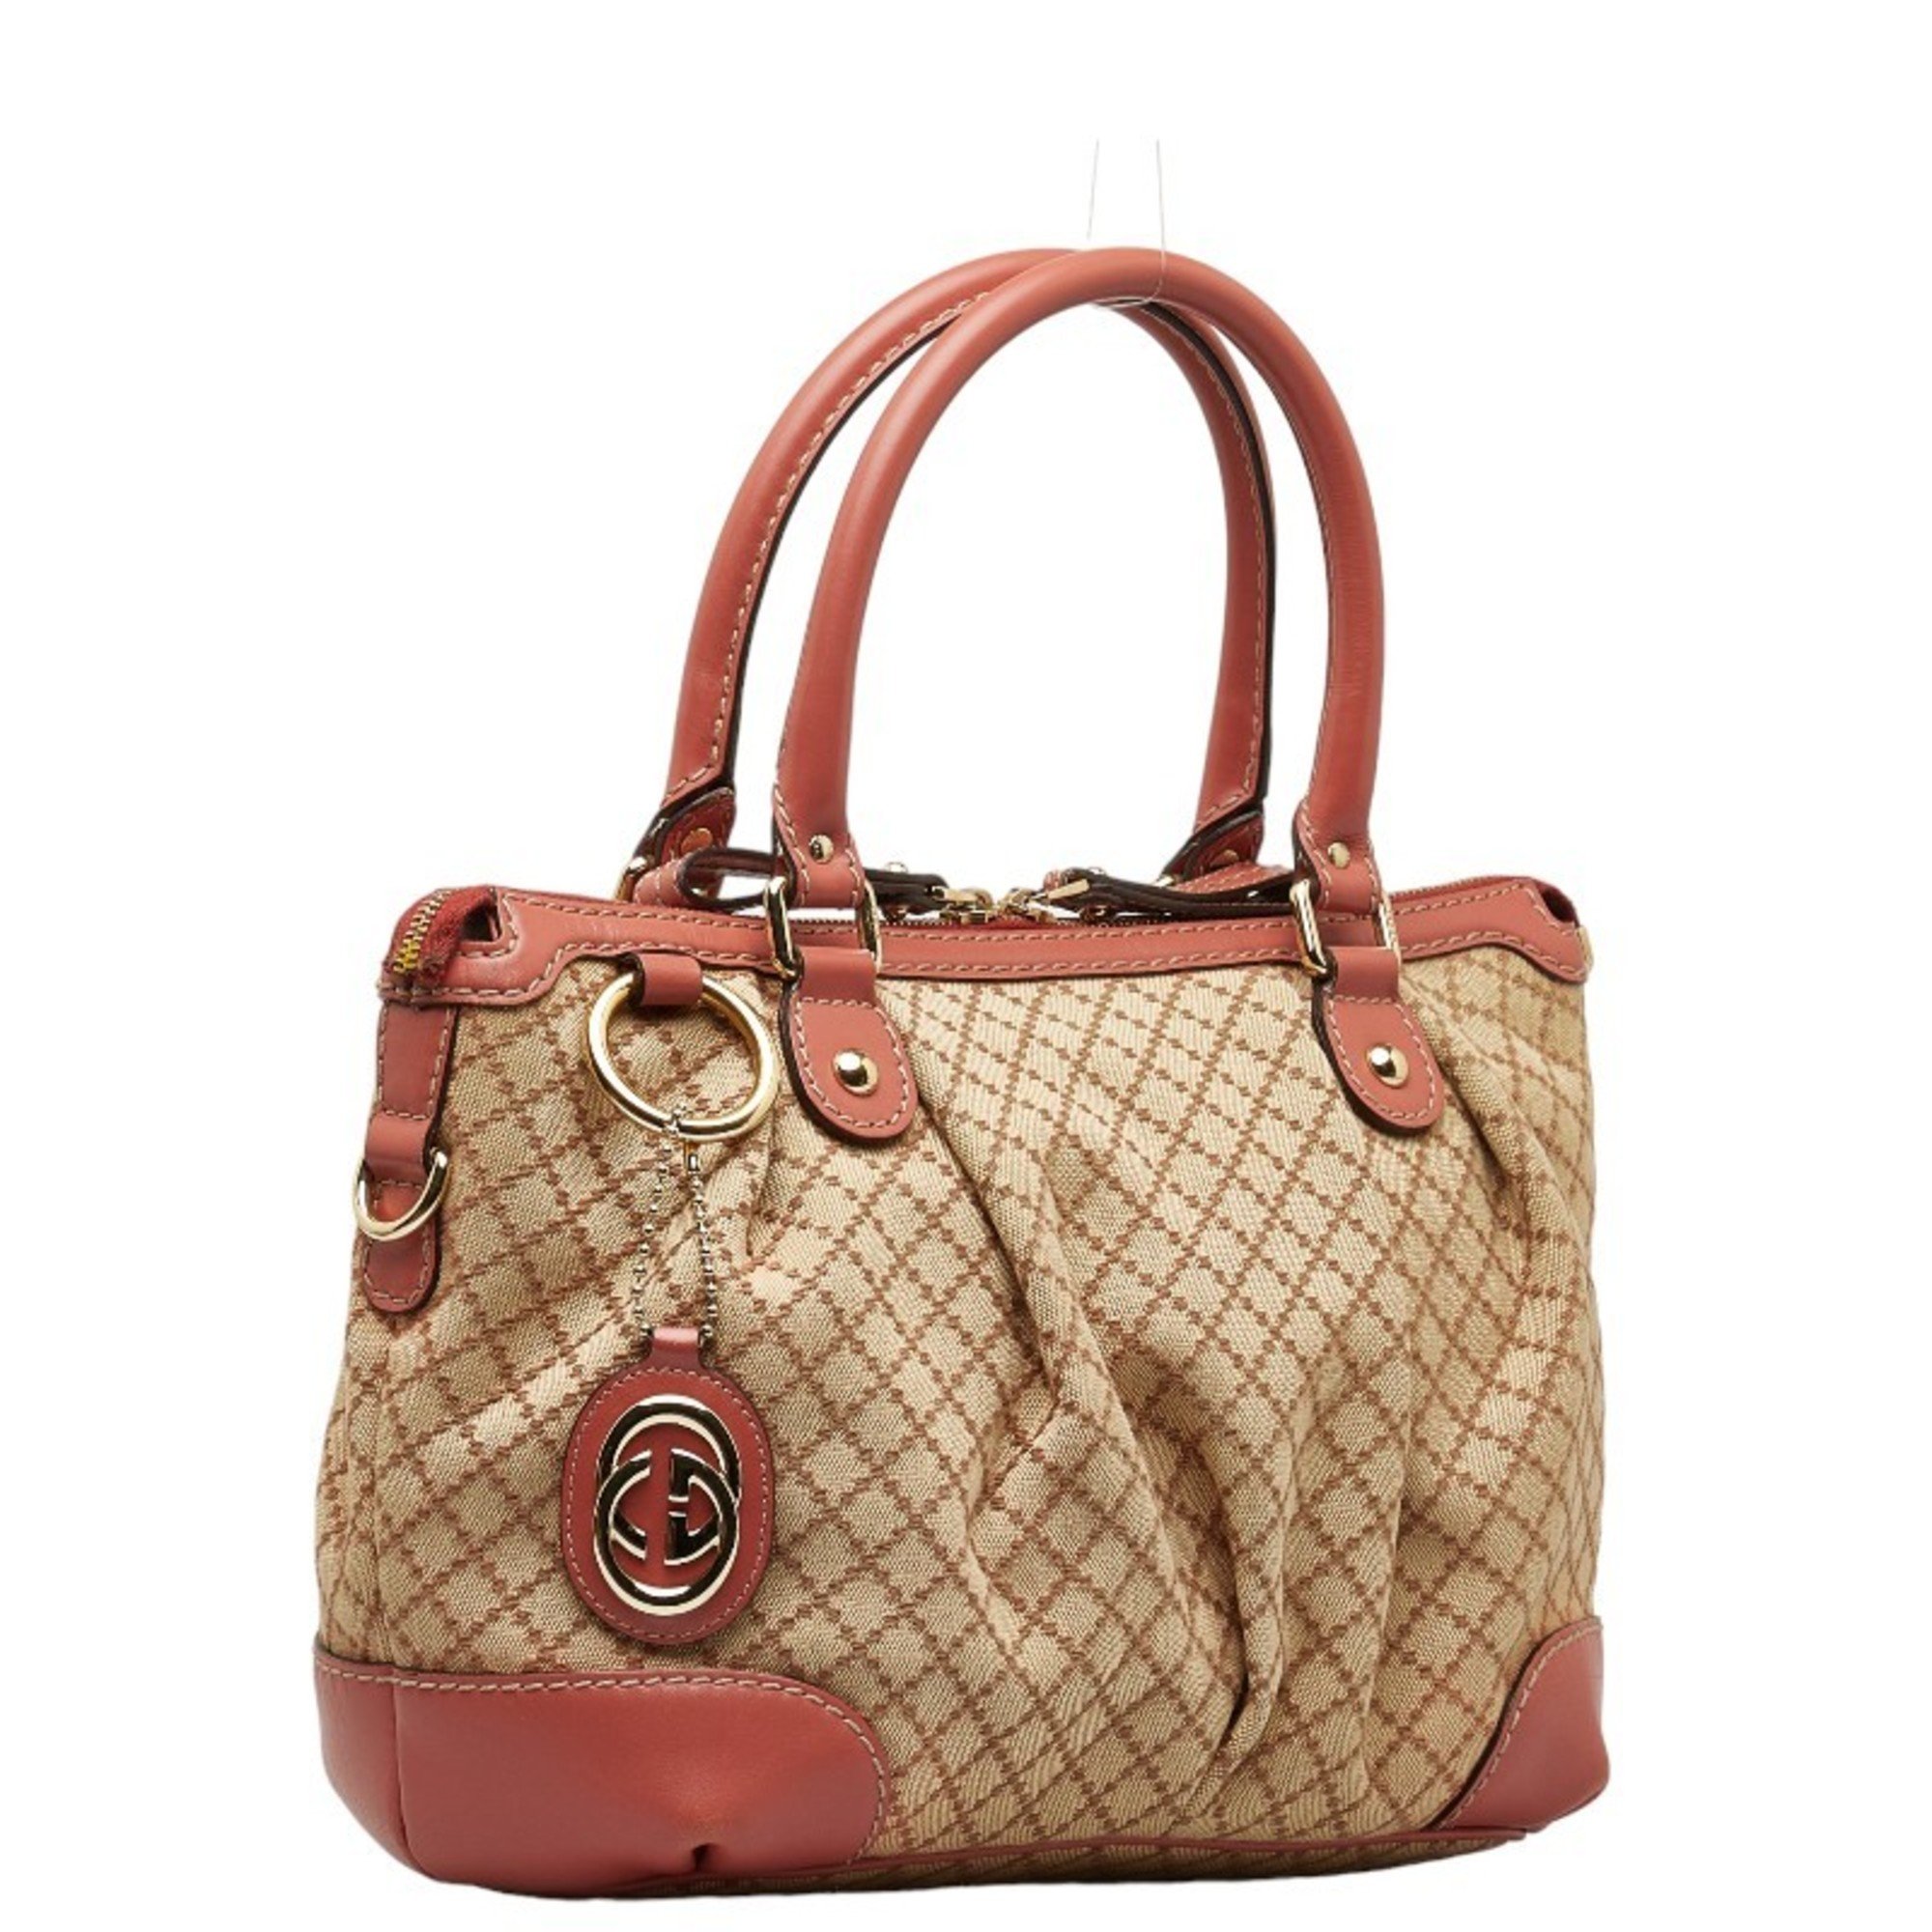 Gucci Diamante Sukey Handbag Shoulder Bag 247902 Beige Pink Canvas Leather Women's GUCCI